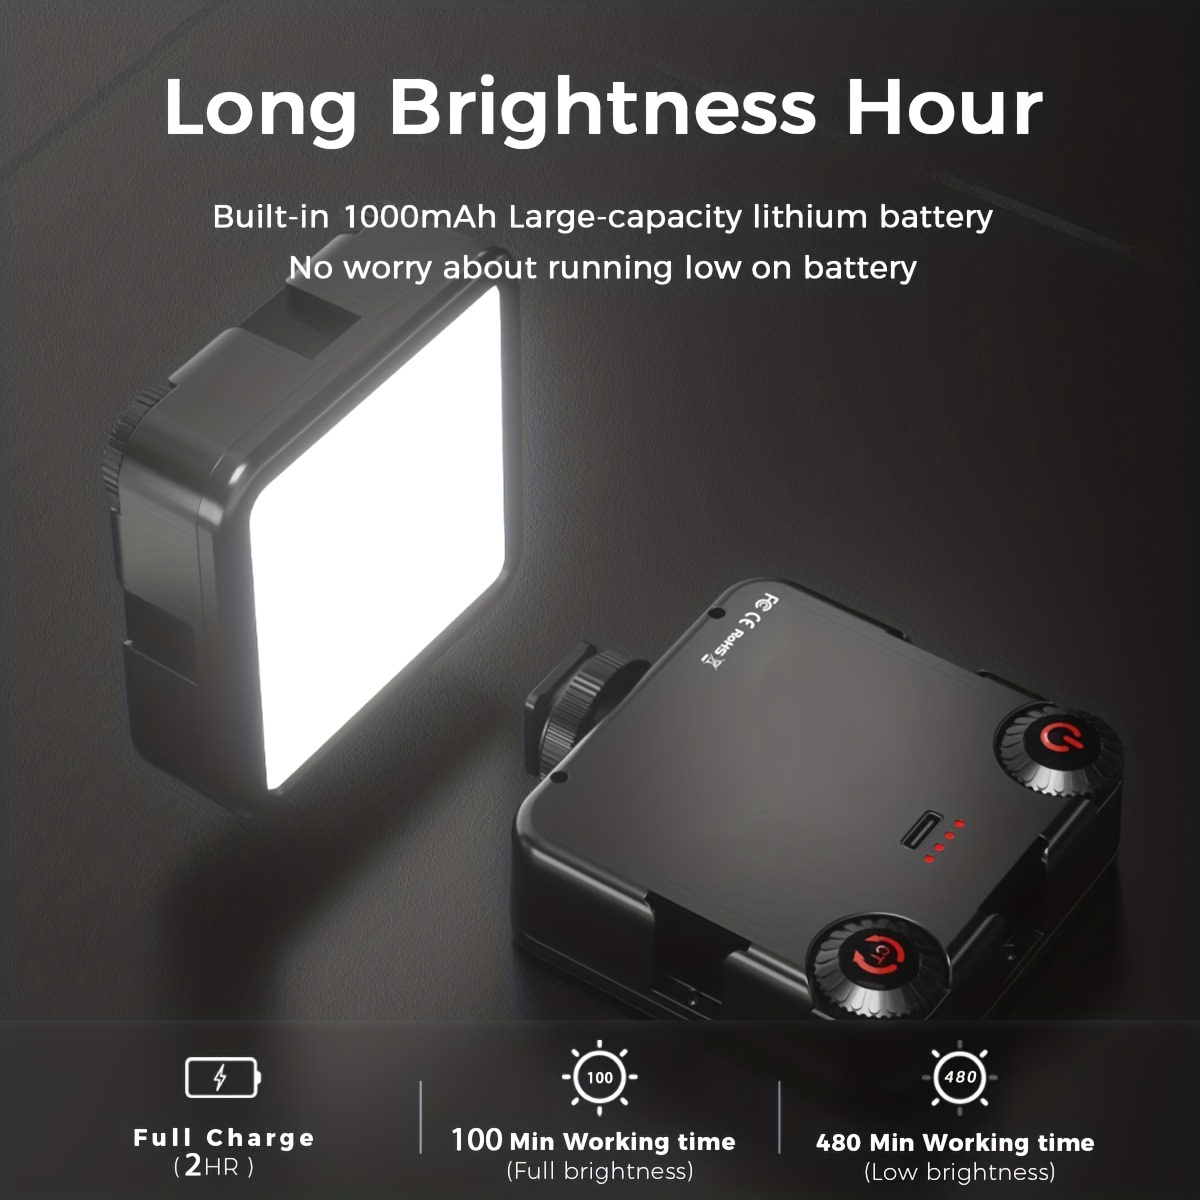 Proyector de luz LED para vídeo en cámara